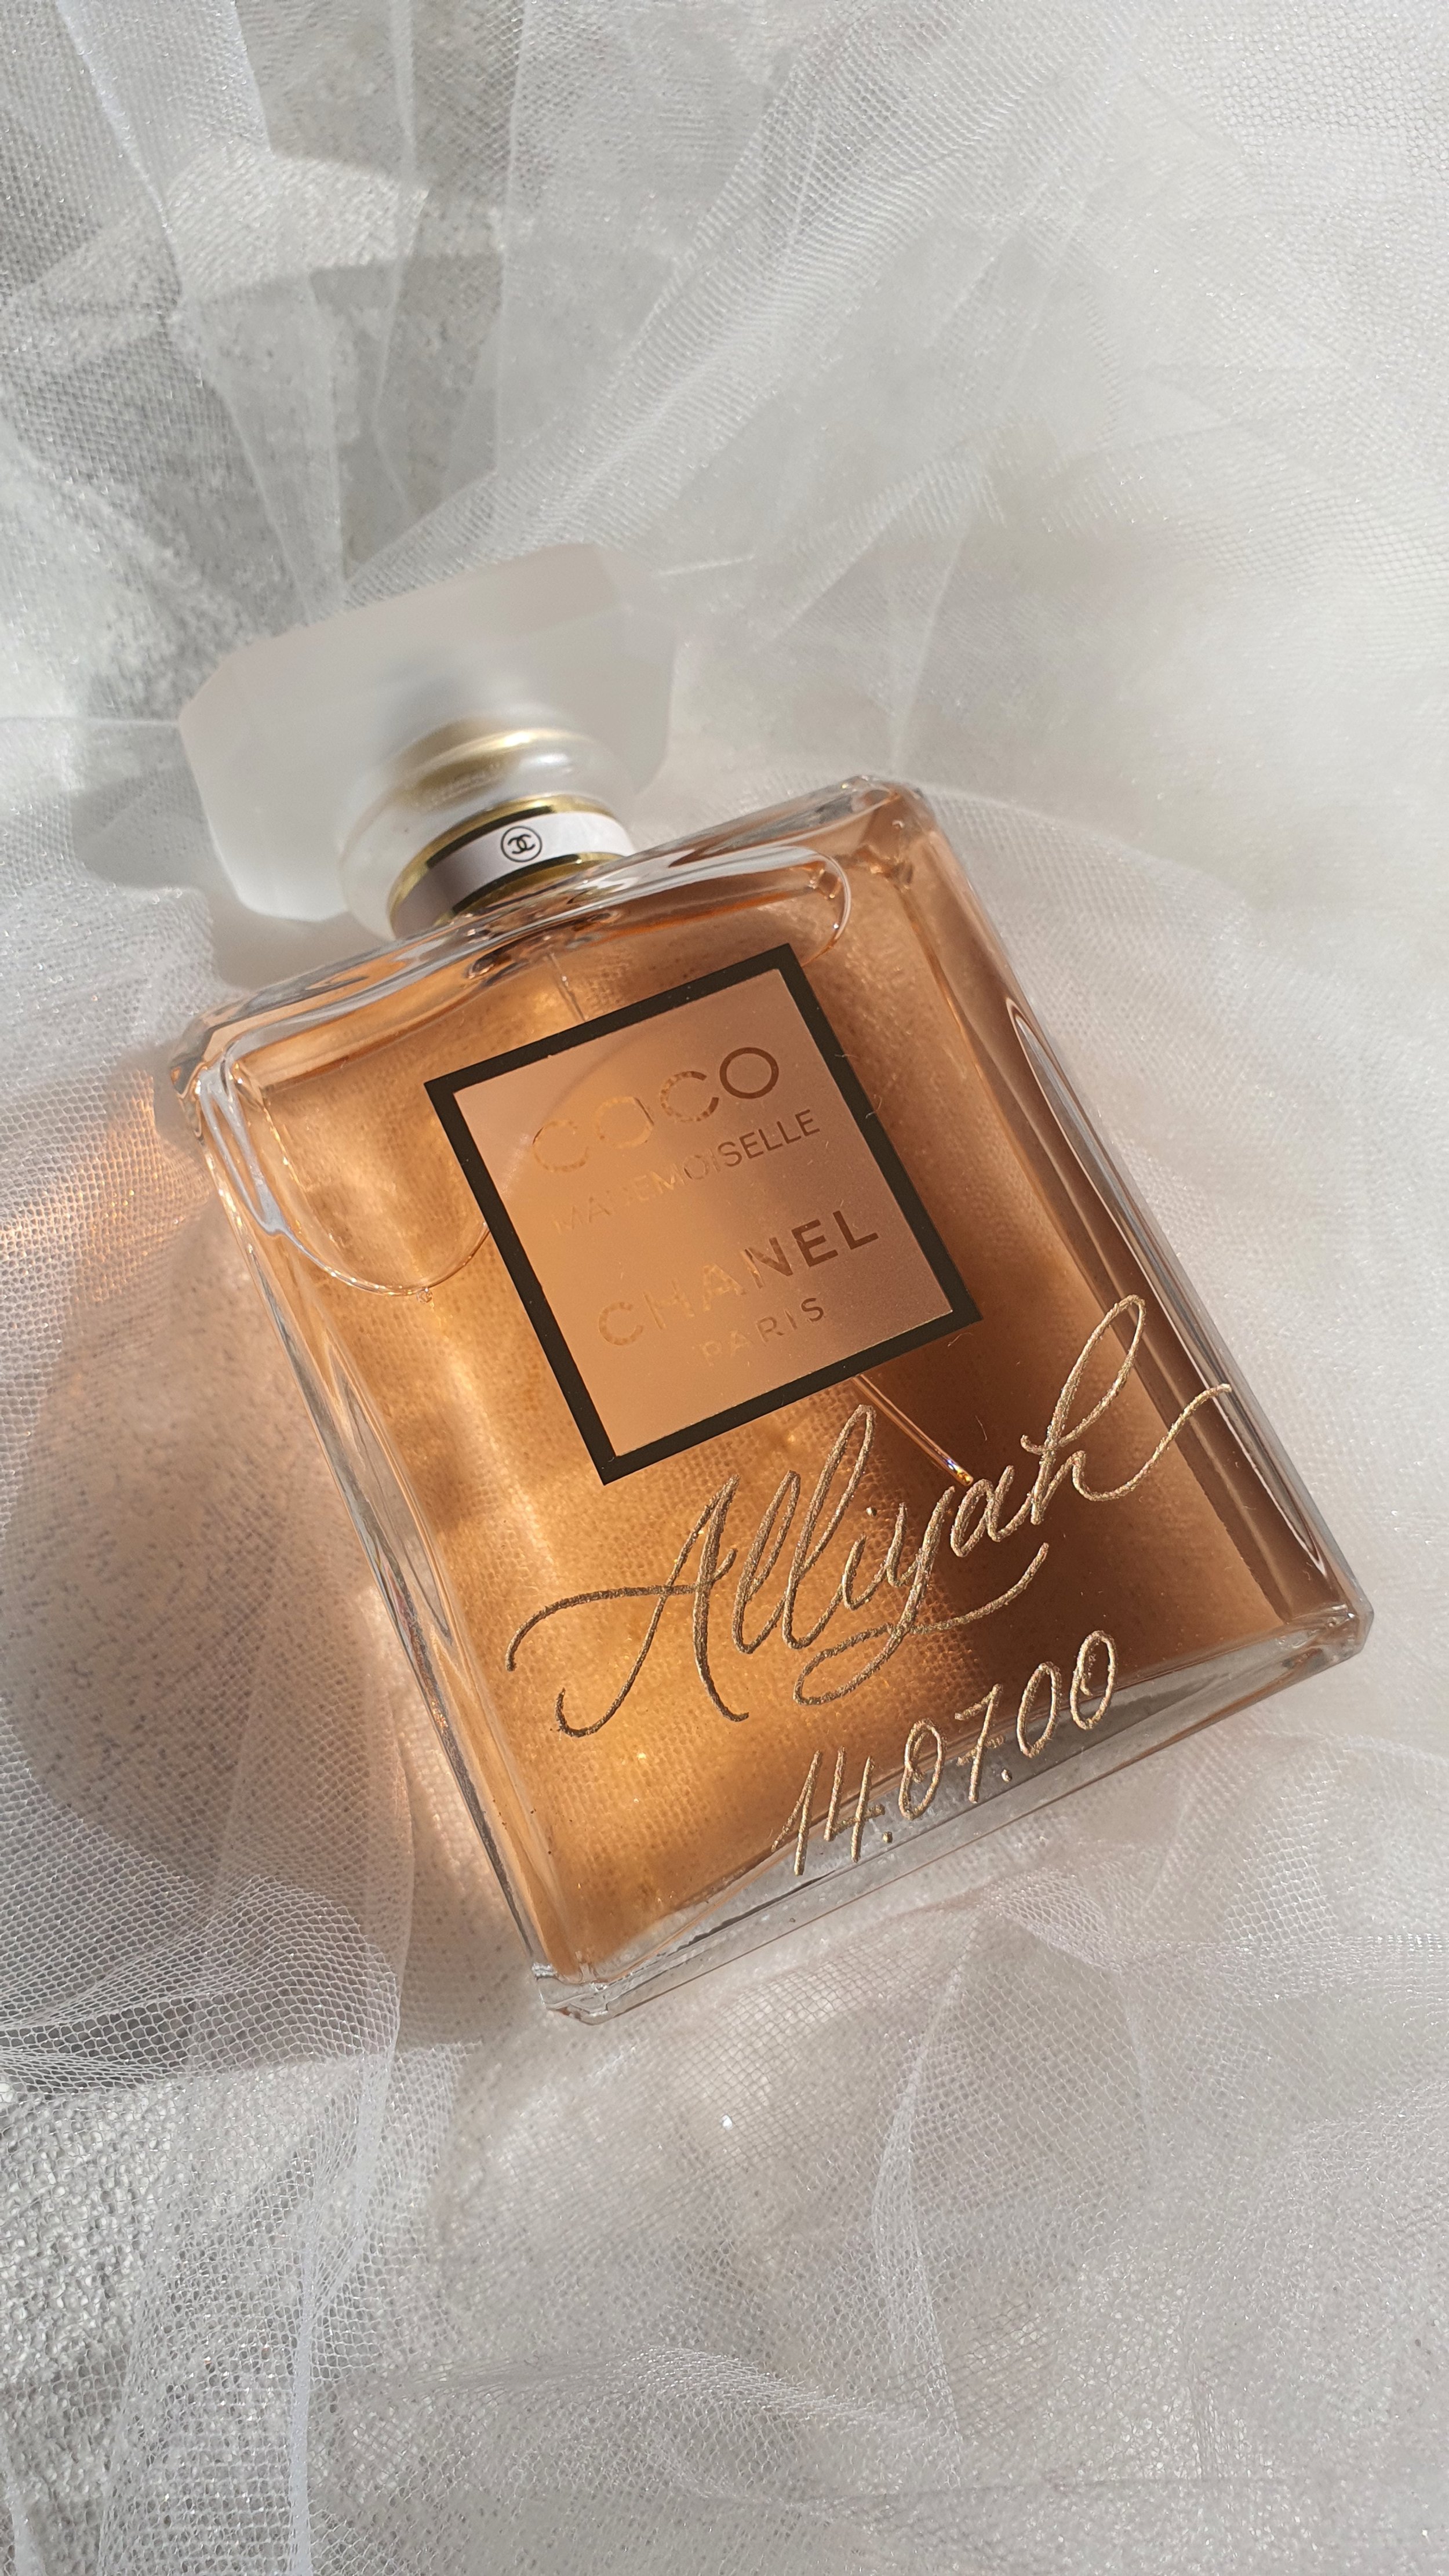 personalised-engraved-coco-mademoiselle-chanel-perfume.jpg